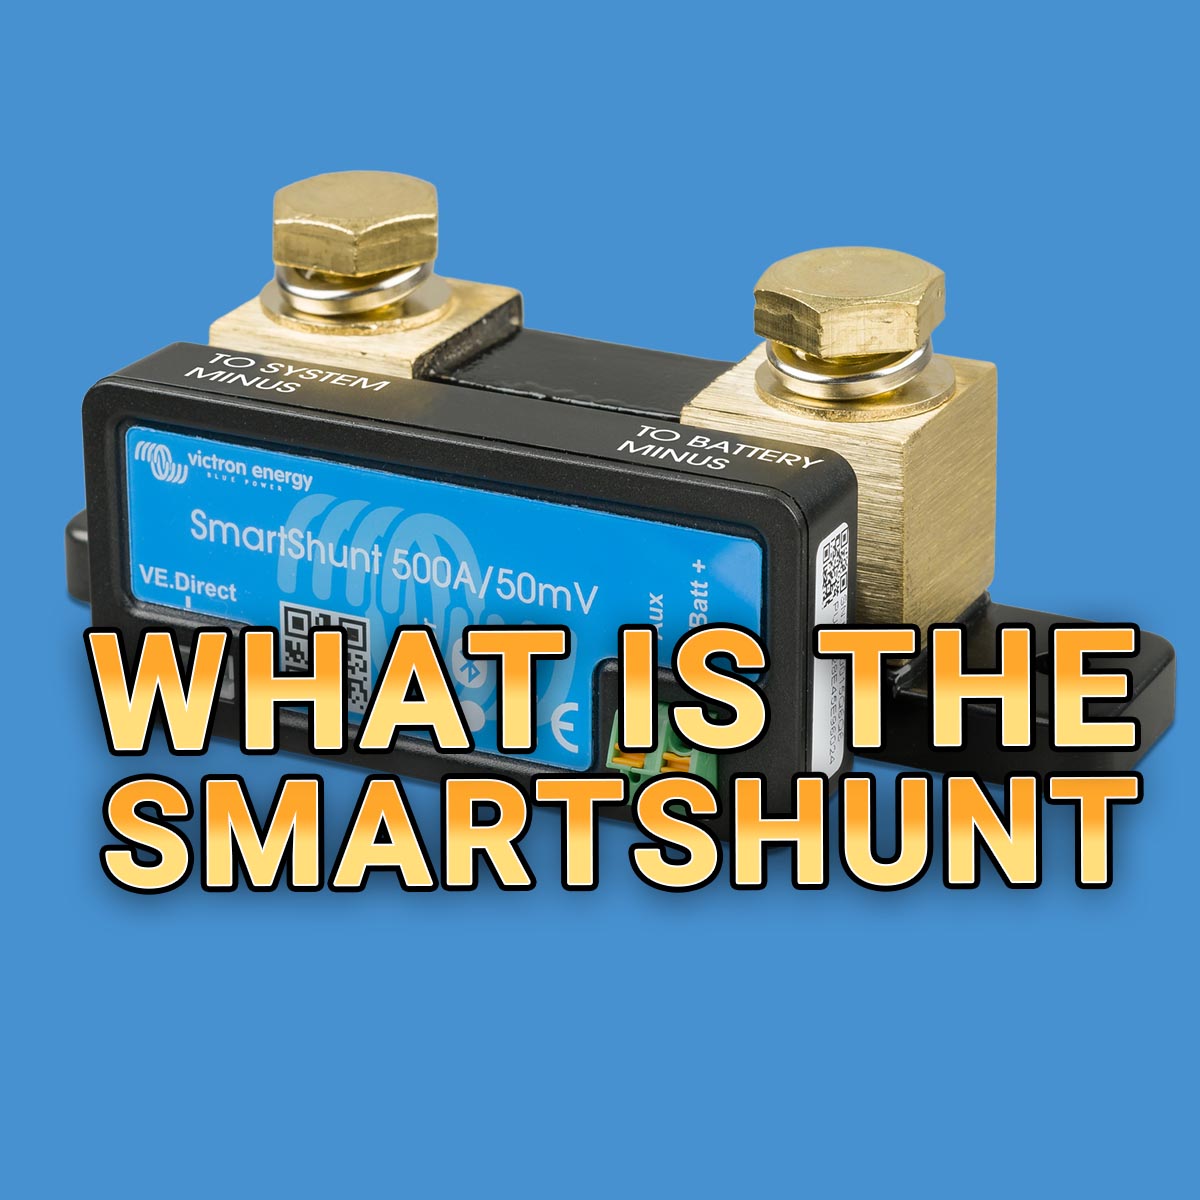 SmartShunt - Victron Energy